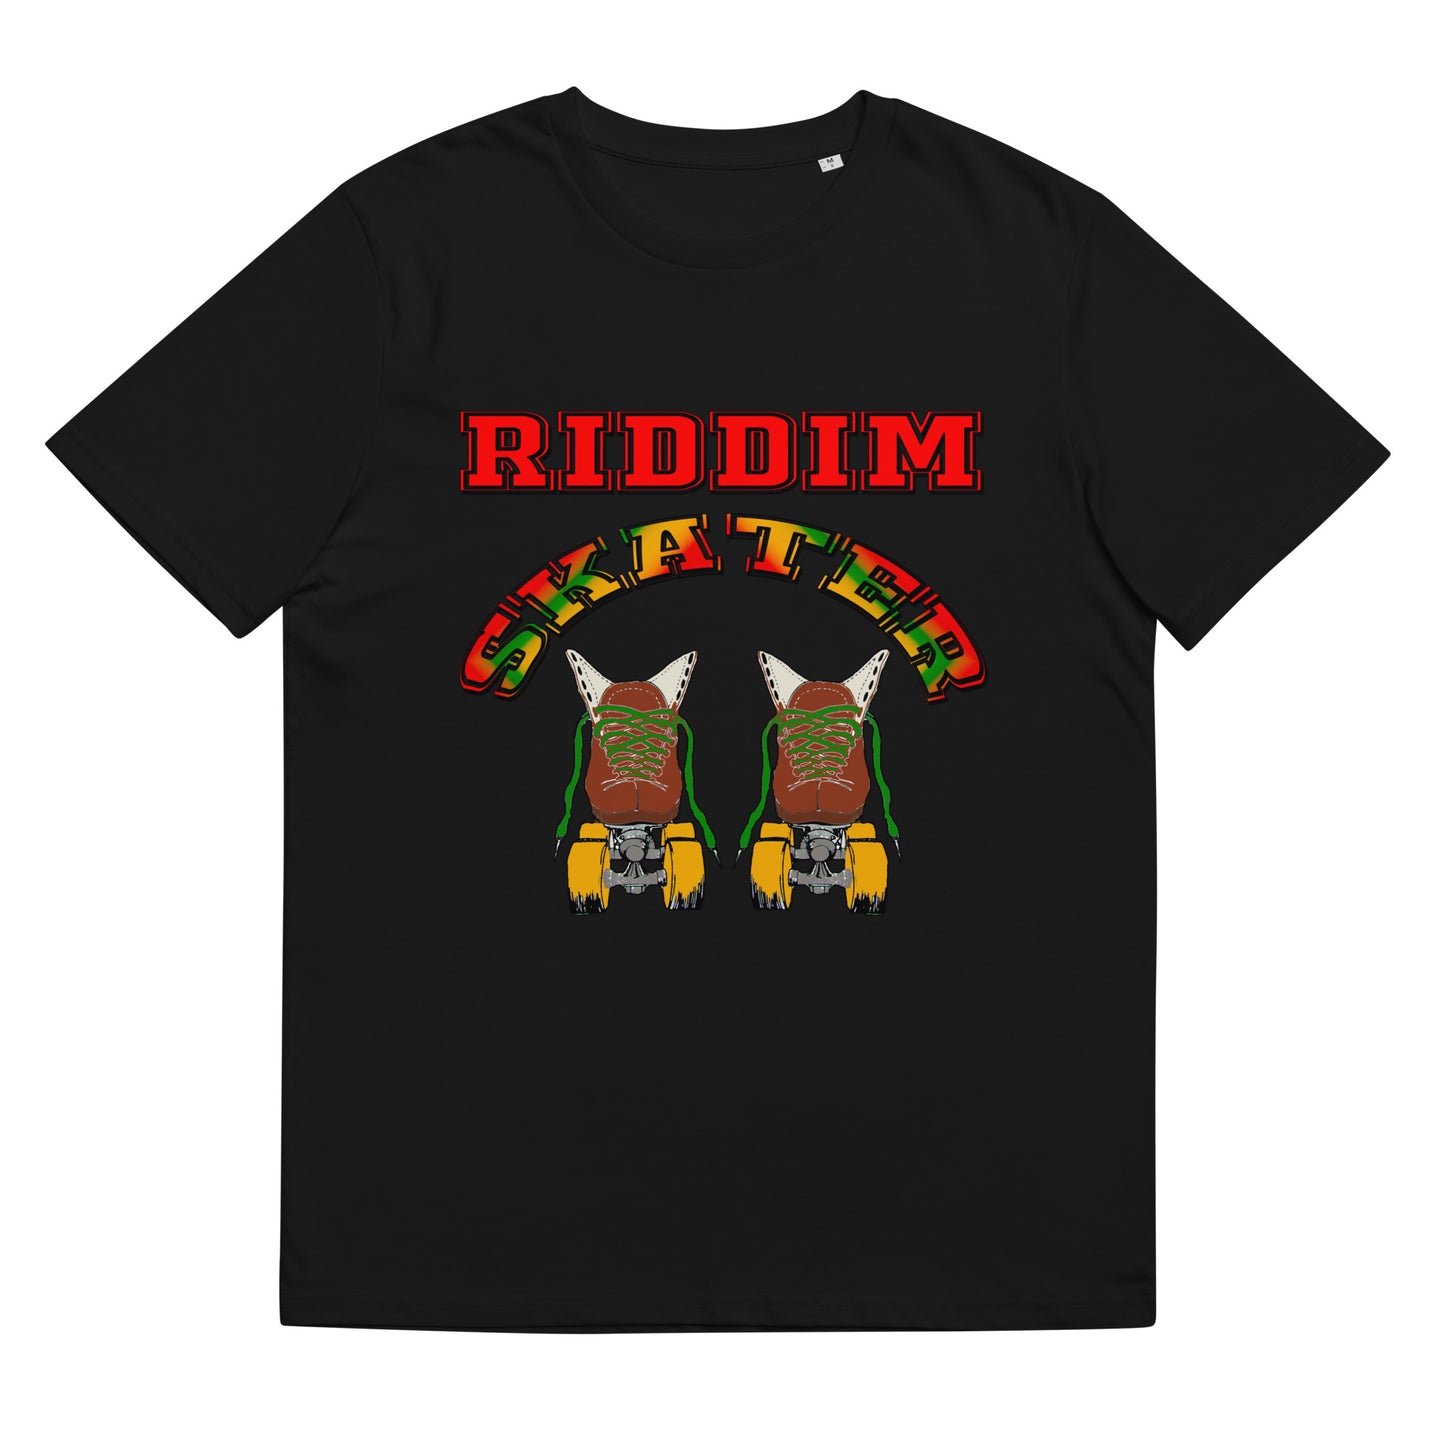 Tshirt Riddim Skater